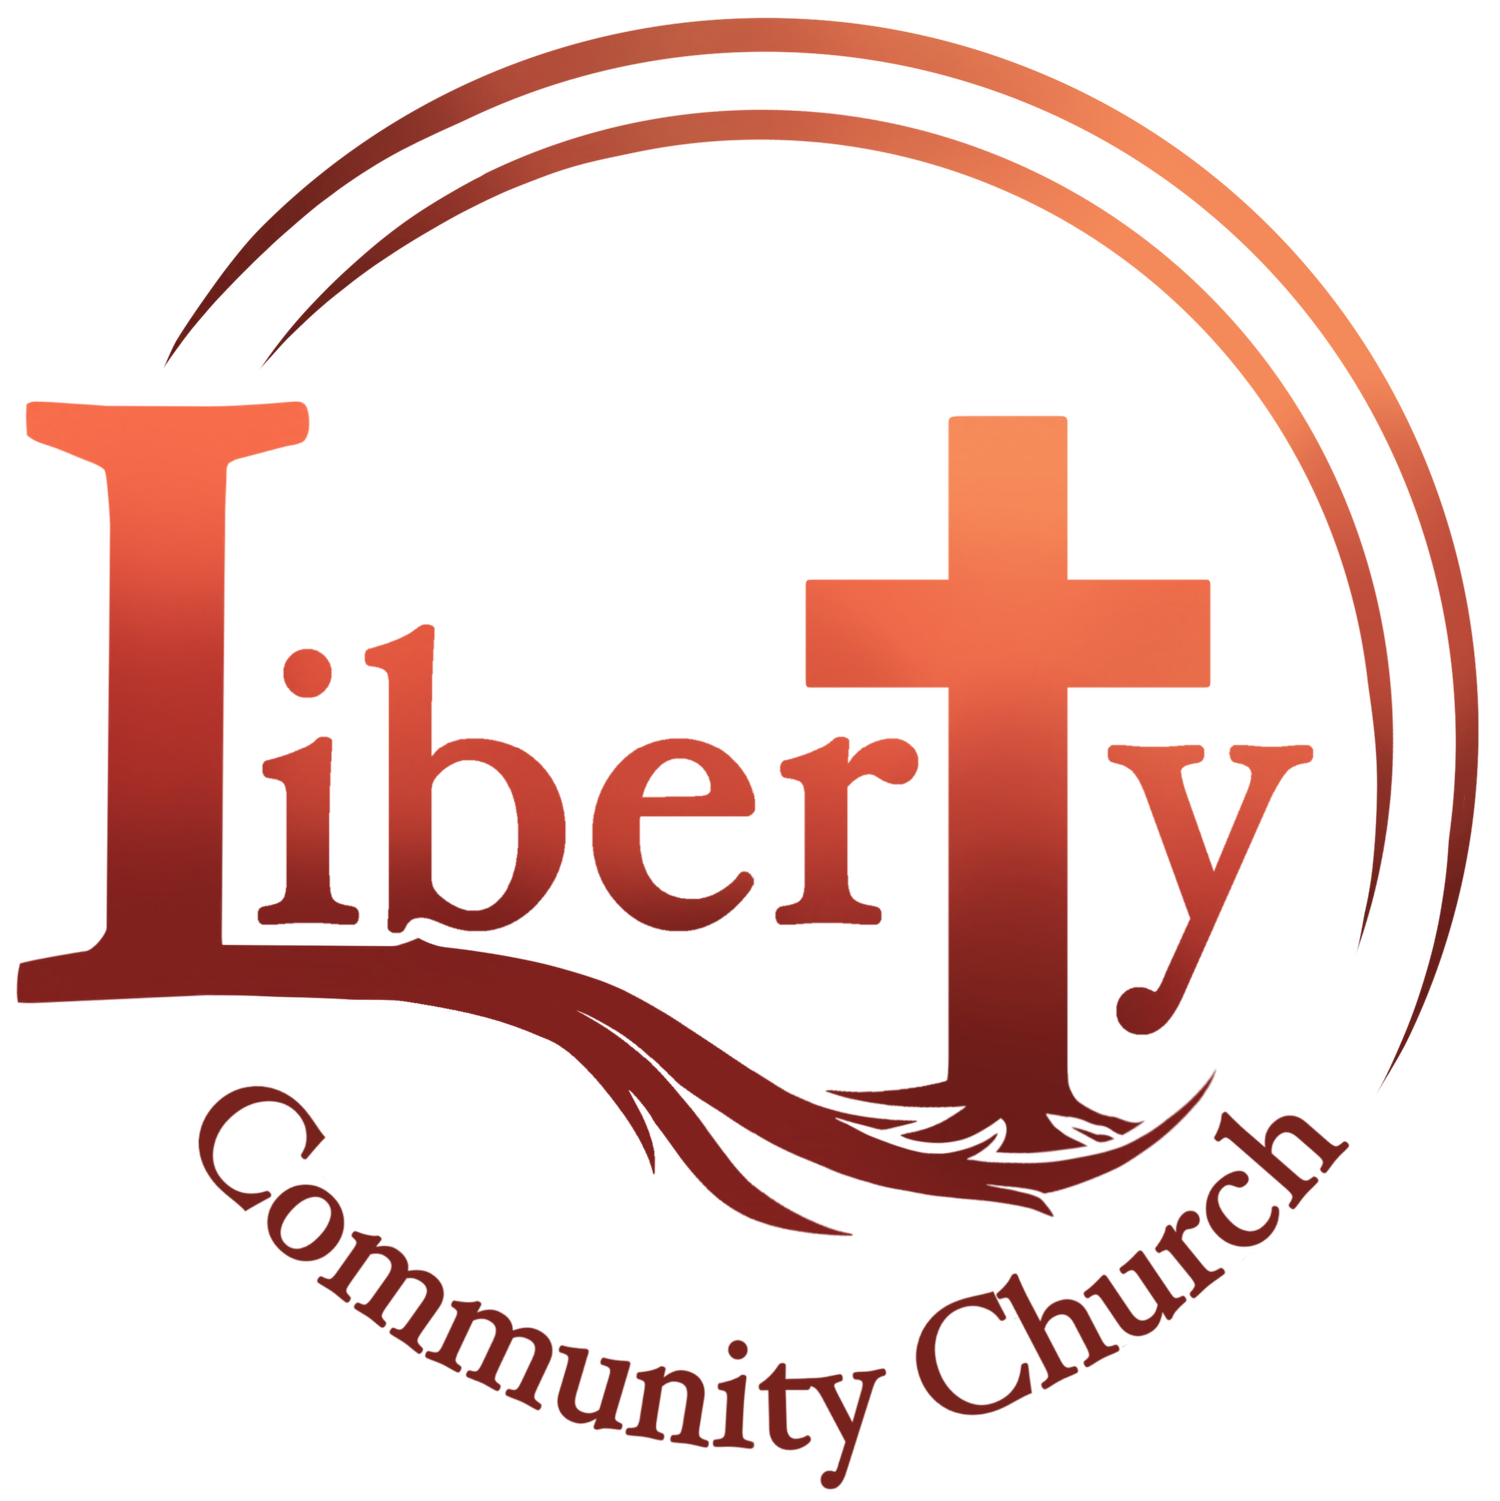 Liberty Community Church